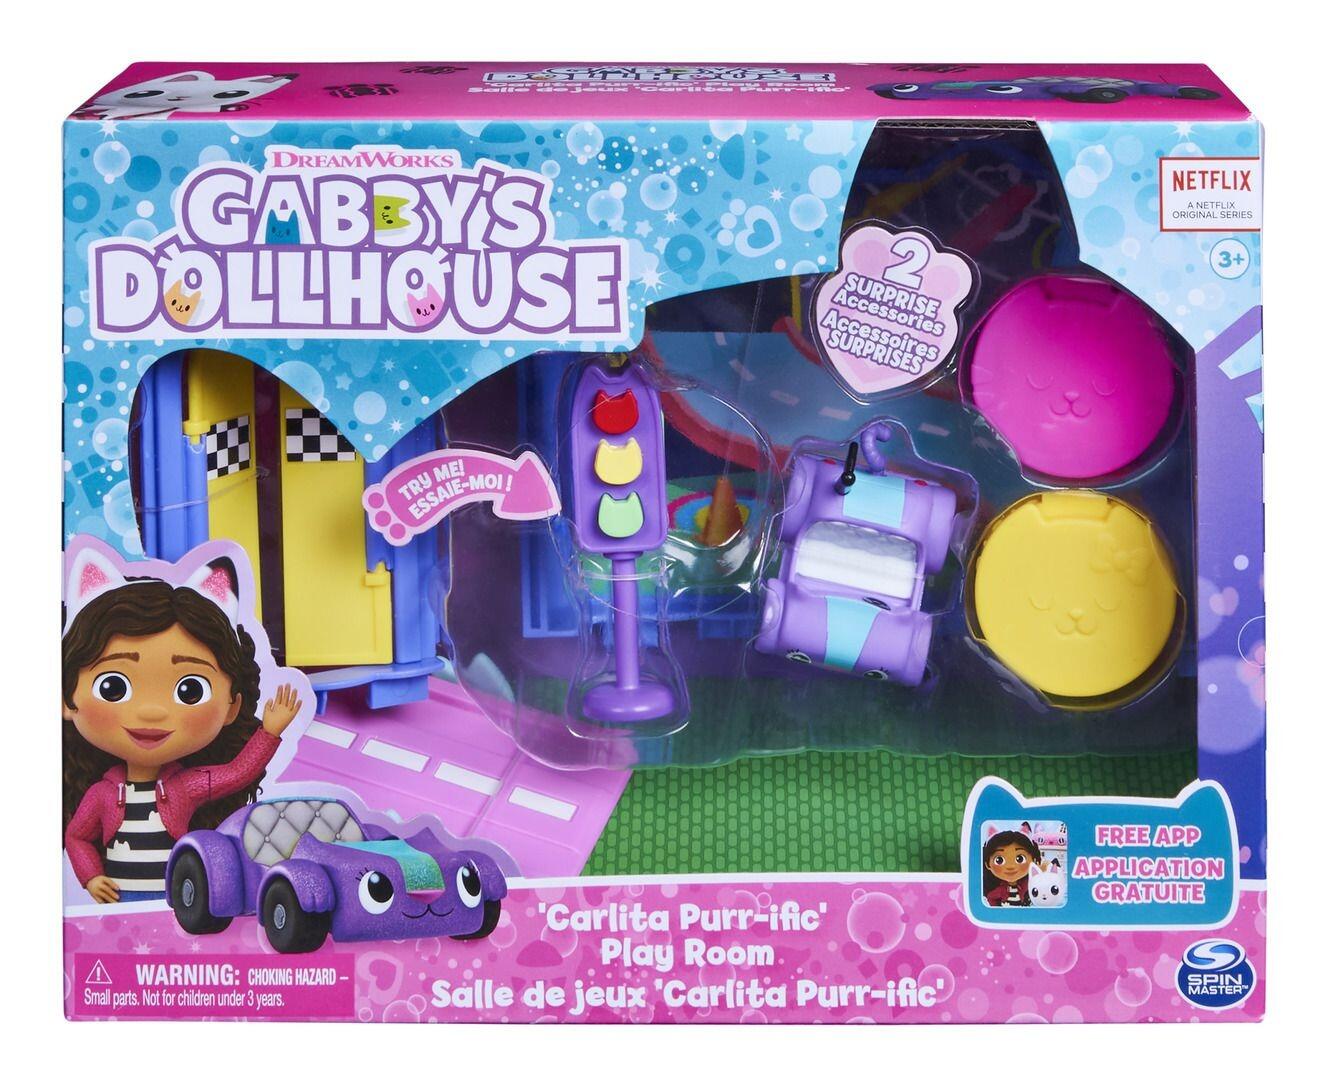 Gabby's Dollhouse Carlita Purr-ific Play Room